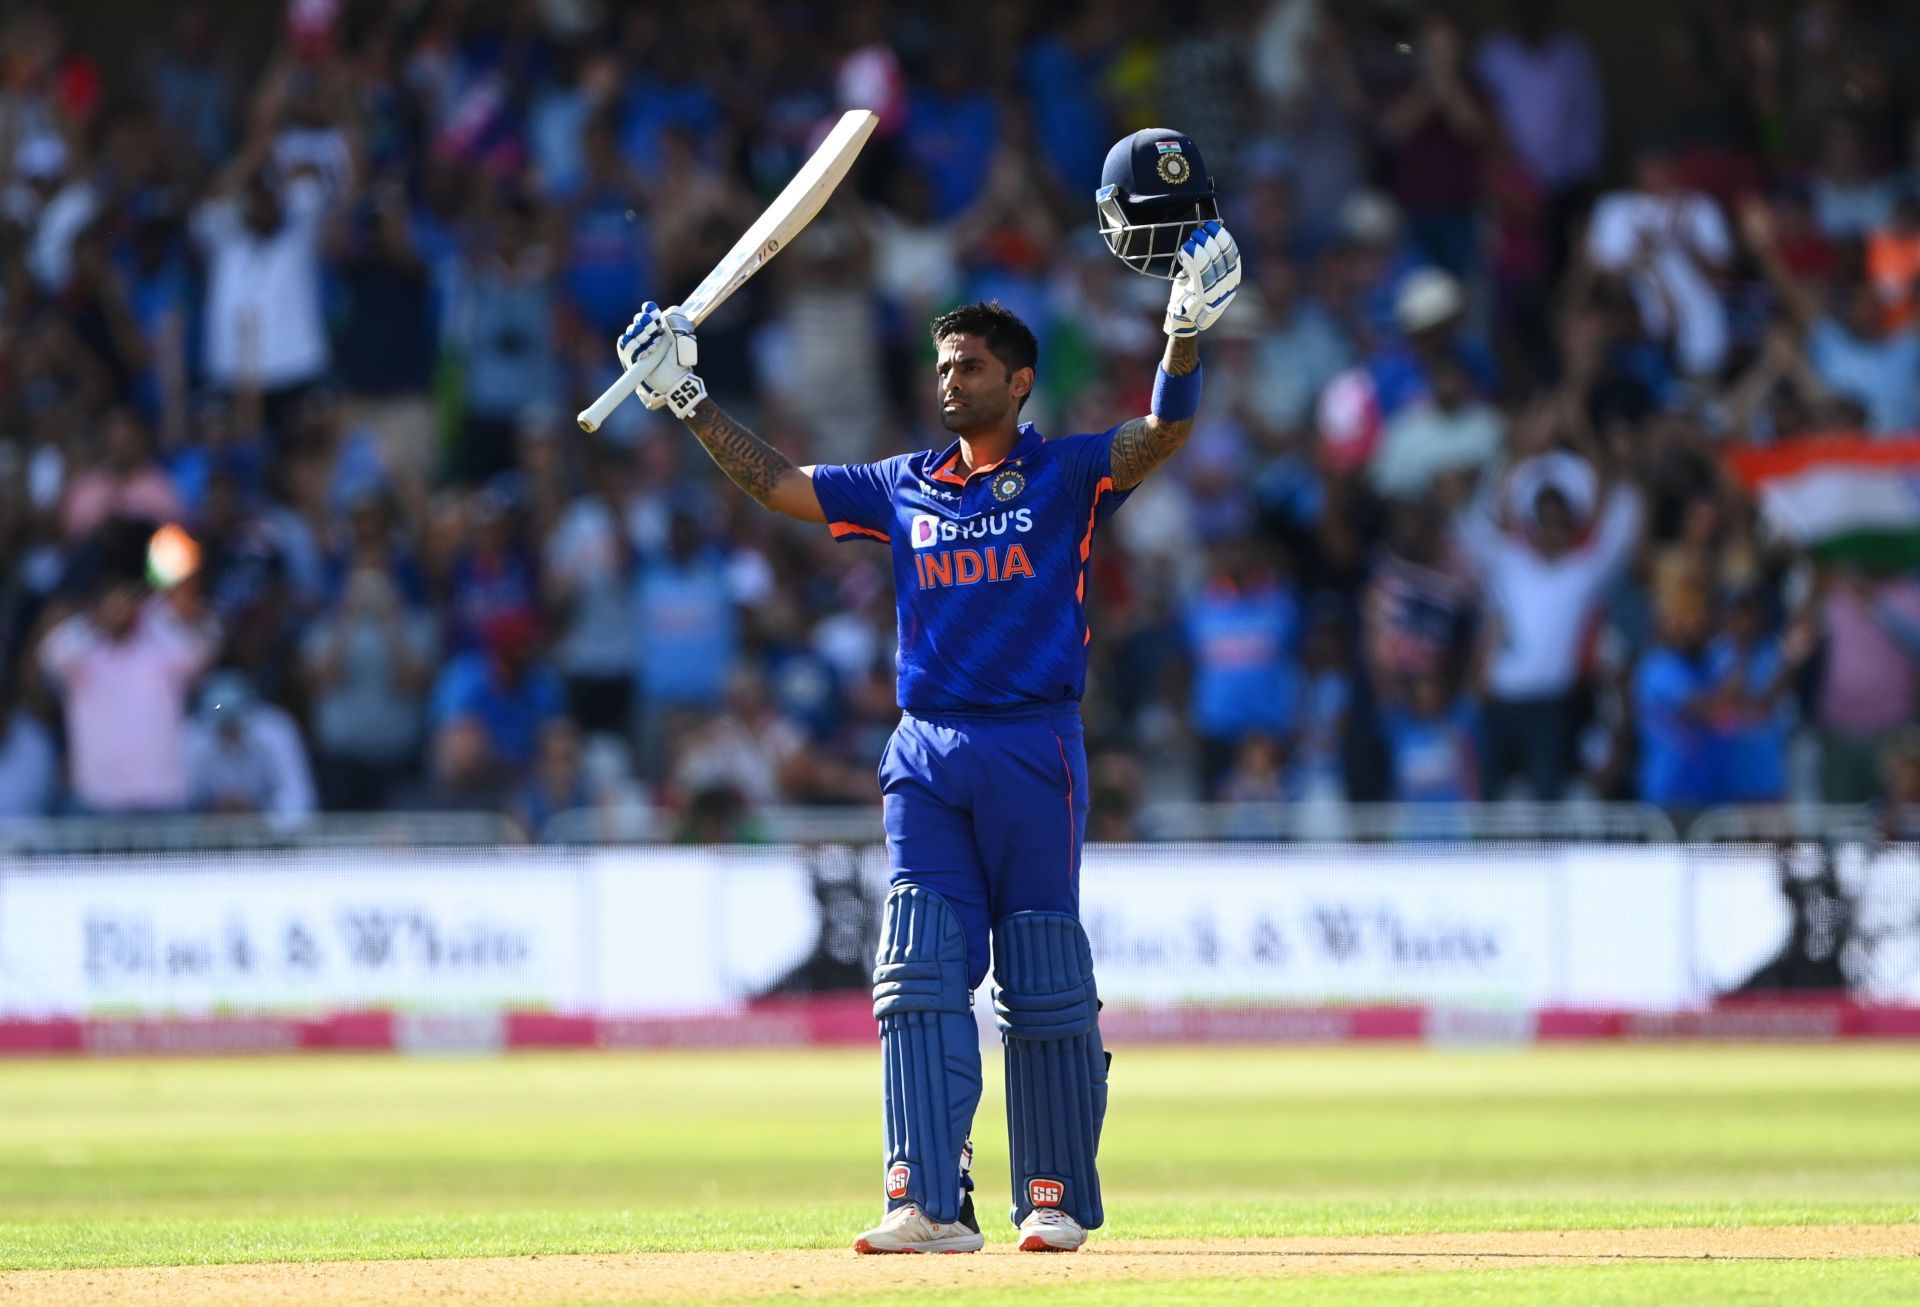 Suryakumar Yadav scored his maiden T20I ton against England